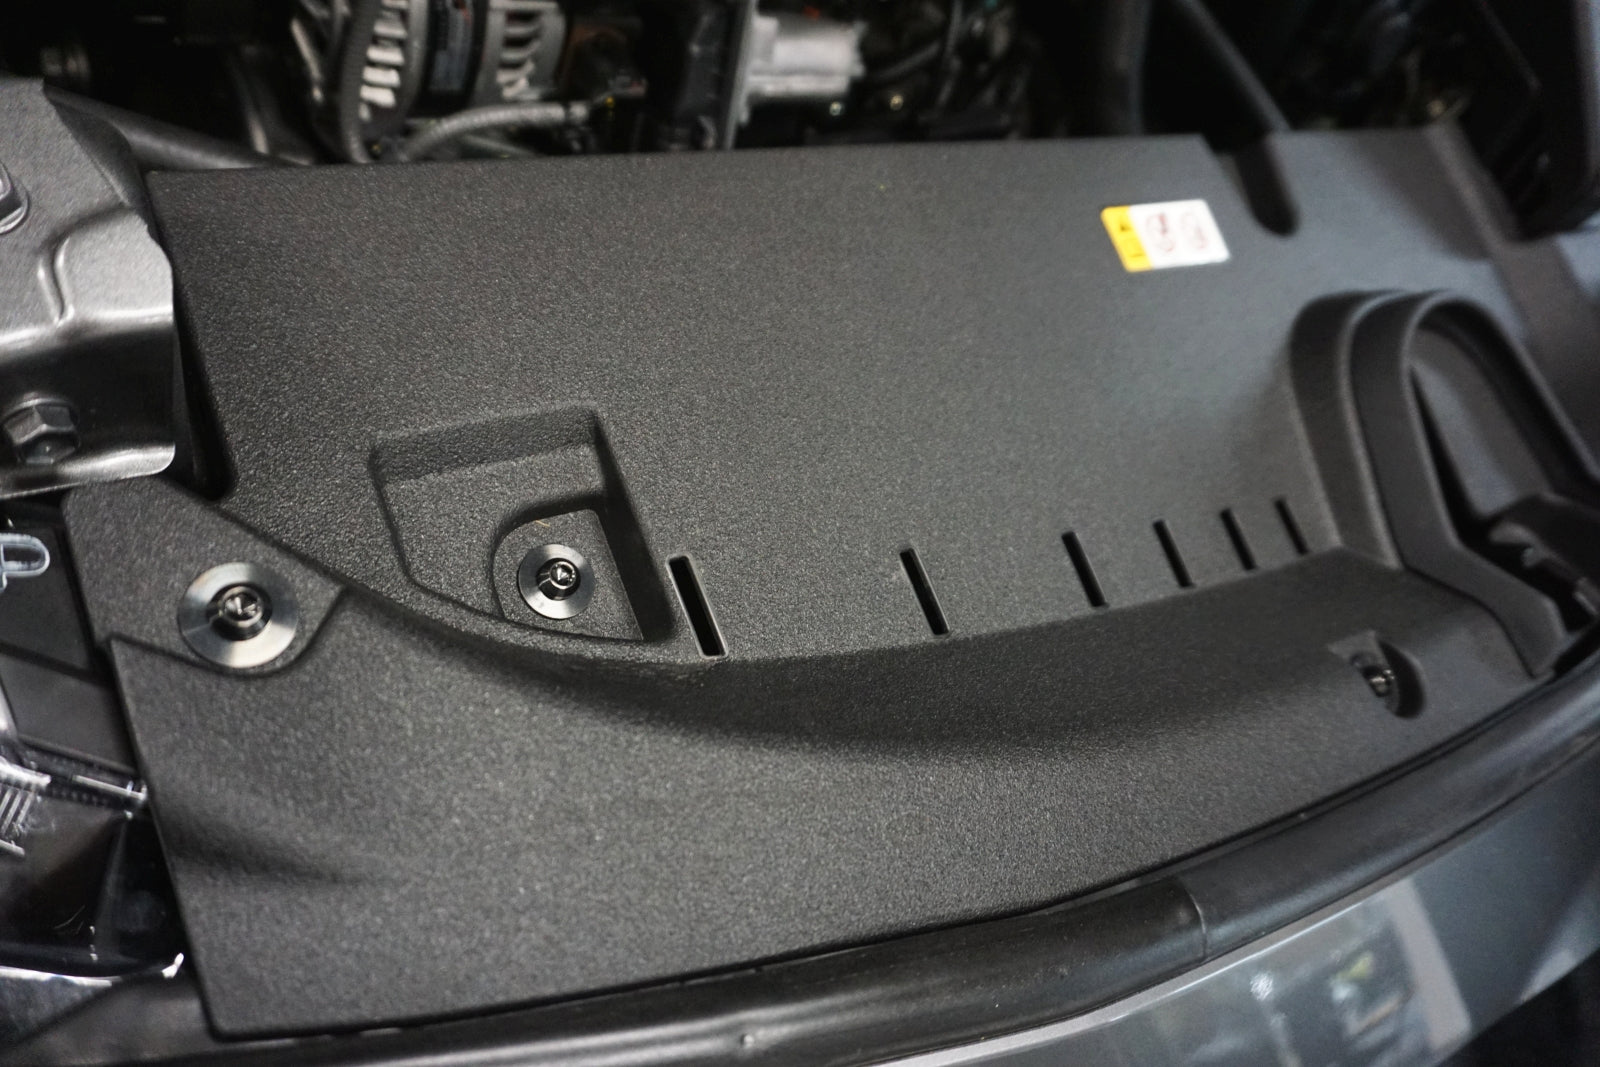 ZSPEC Stage-3 Dress Up Bolts® Fastener Kit for the GR Corolla, Titanium & Billet   Keywords Dress Up Bolts Hardware Show Quality Car Show Upgrade Performance Engine Bay Project Car Hobby Garage